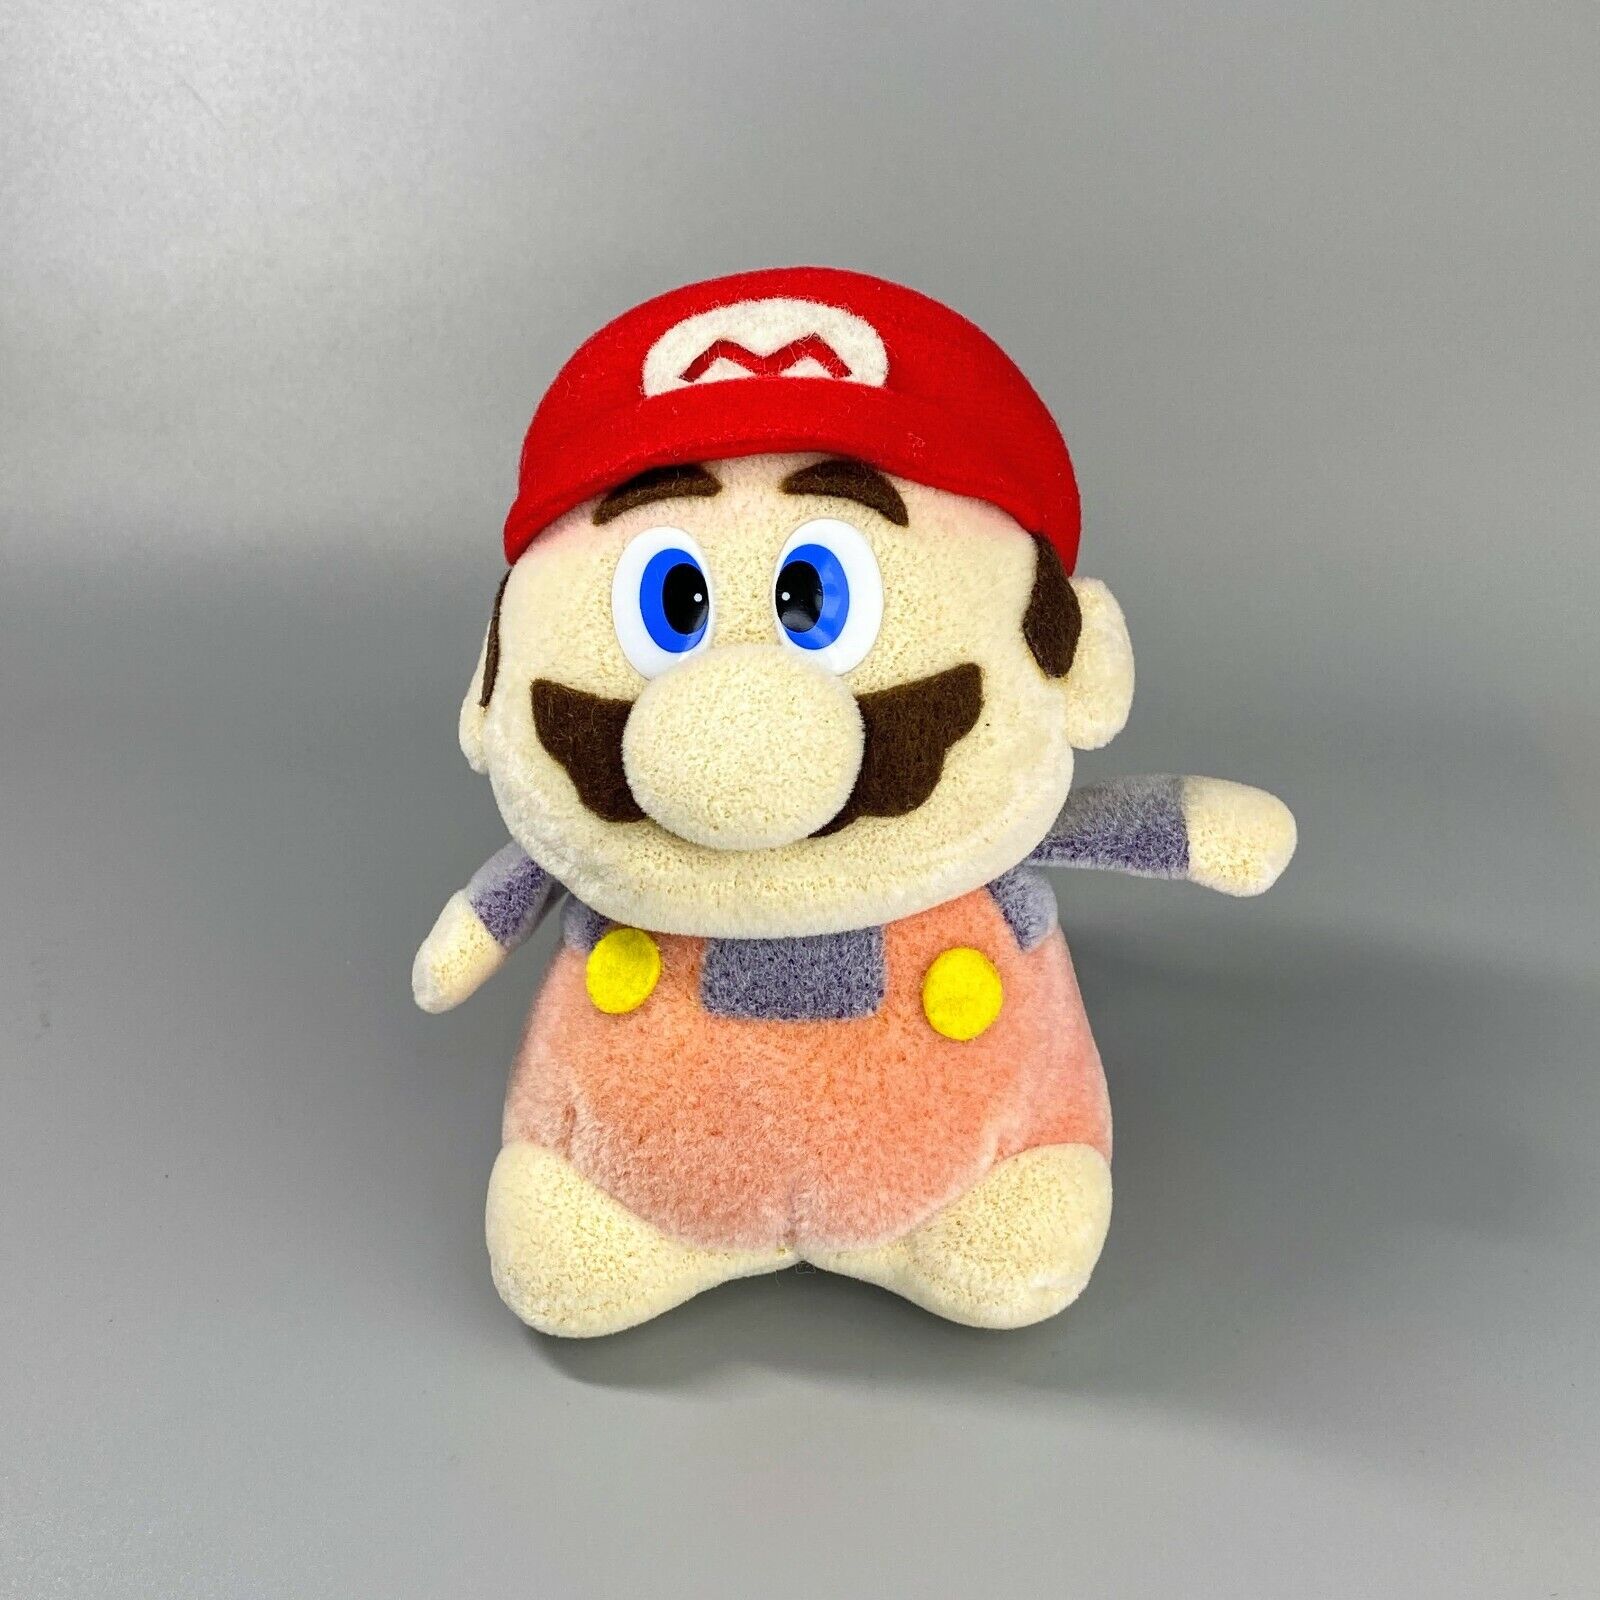 Rare 2003 Super Mario World MARIO Ofuroppi color changes plush doll toy Nintendo